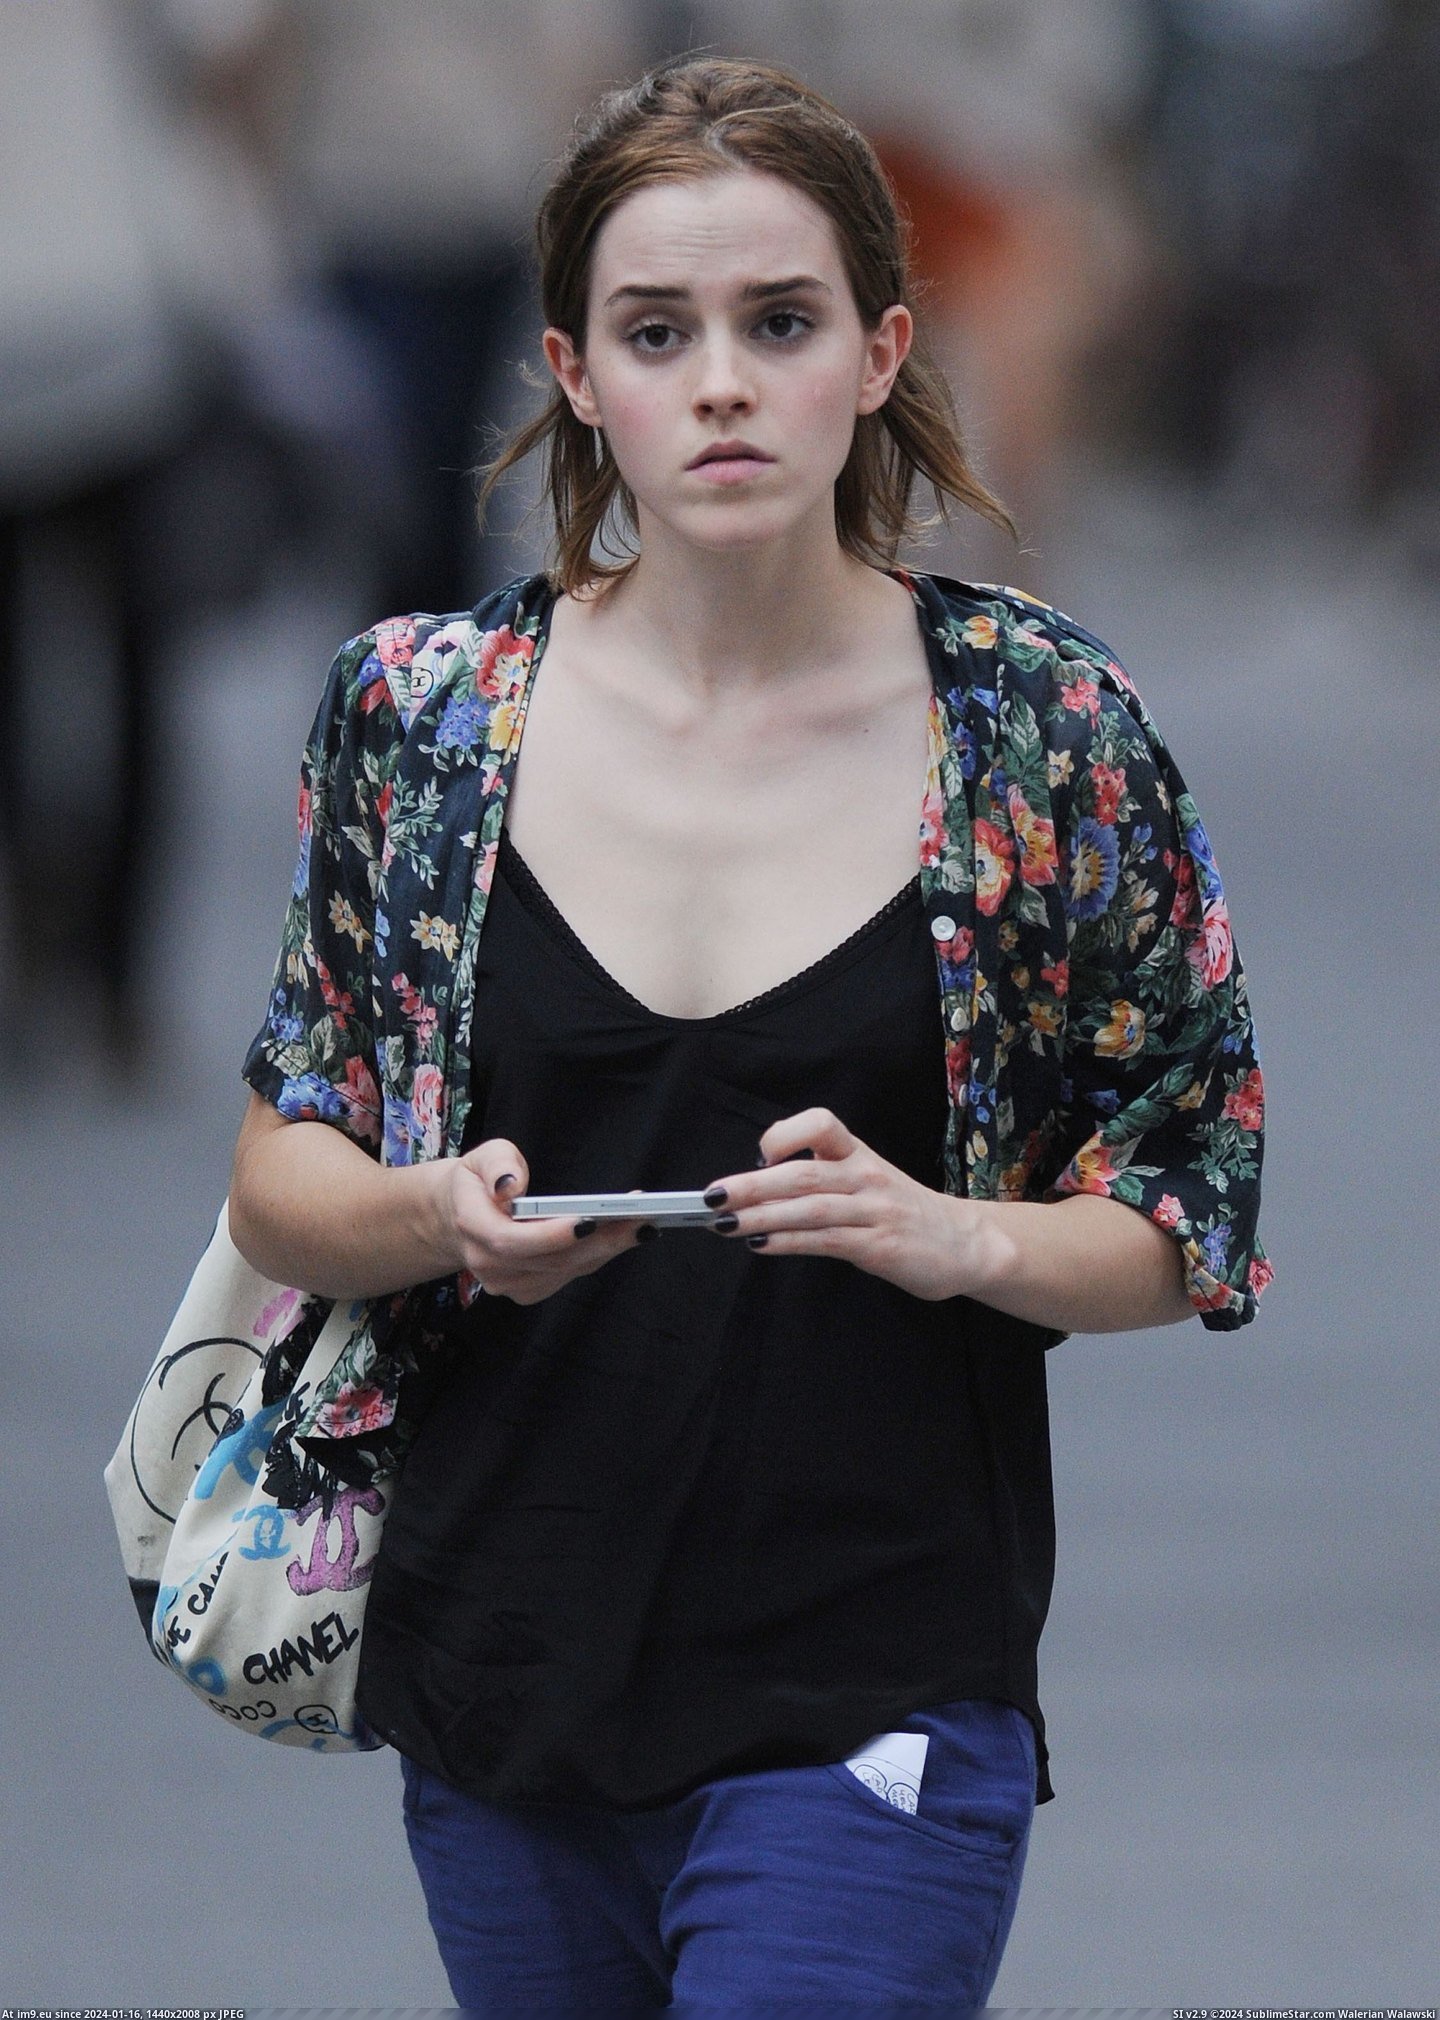 #Photo #New #Out #York #Xfktuva #Emma #Watson #City Emma Watson Out And About In New York City July 26 2012 Xfktuva (emma photo) Pic. (Obraz z album Emma Watson Photos))